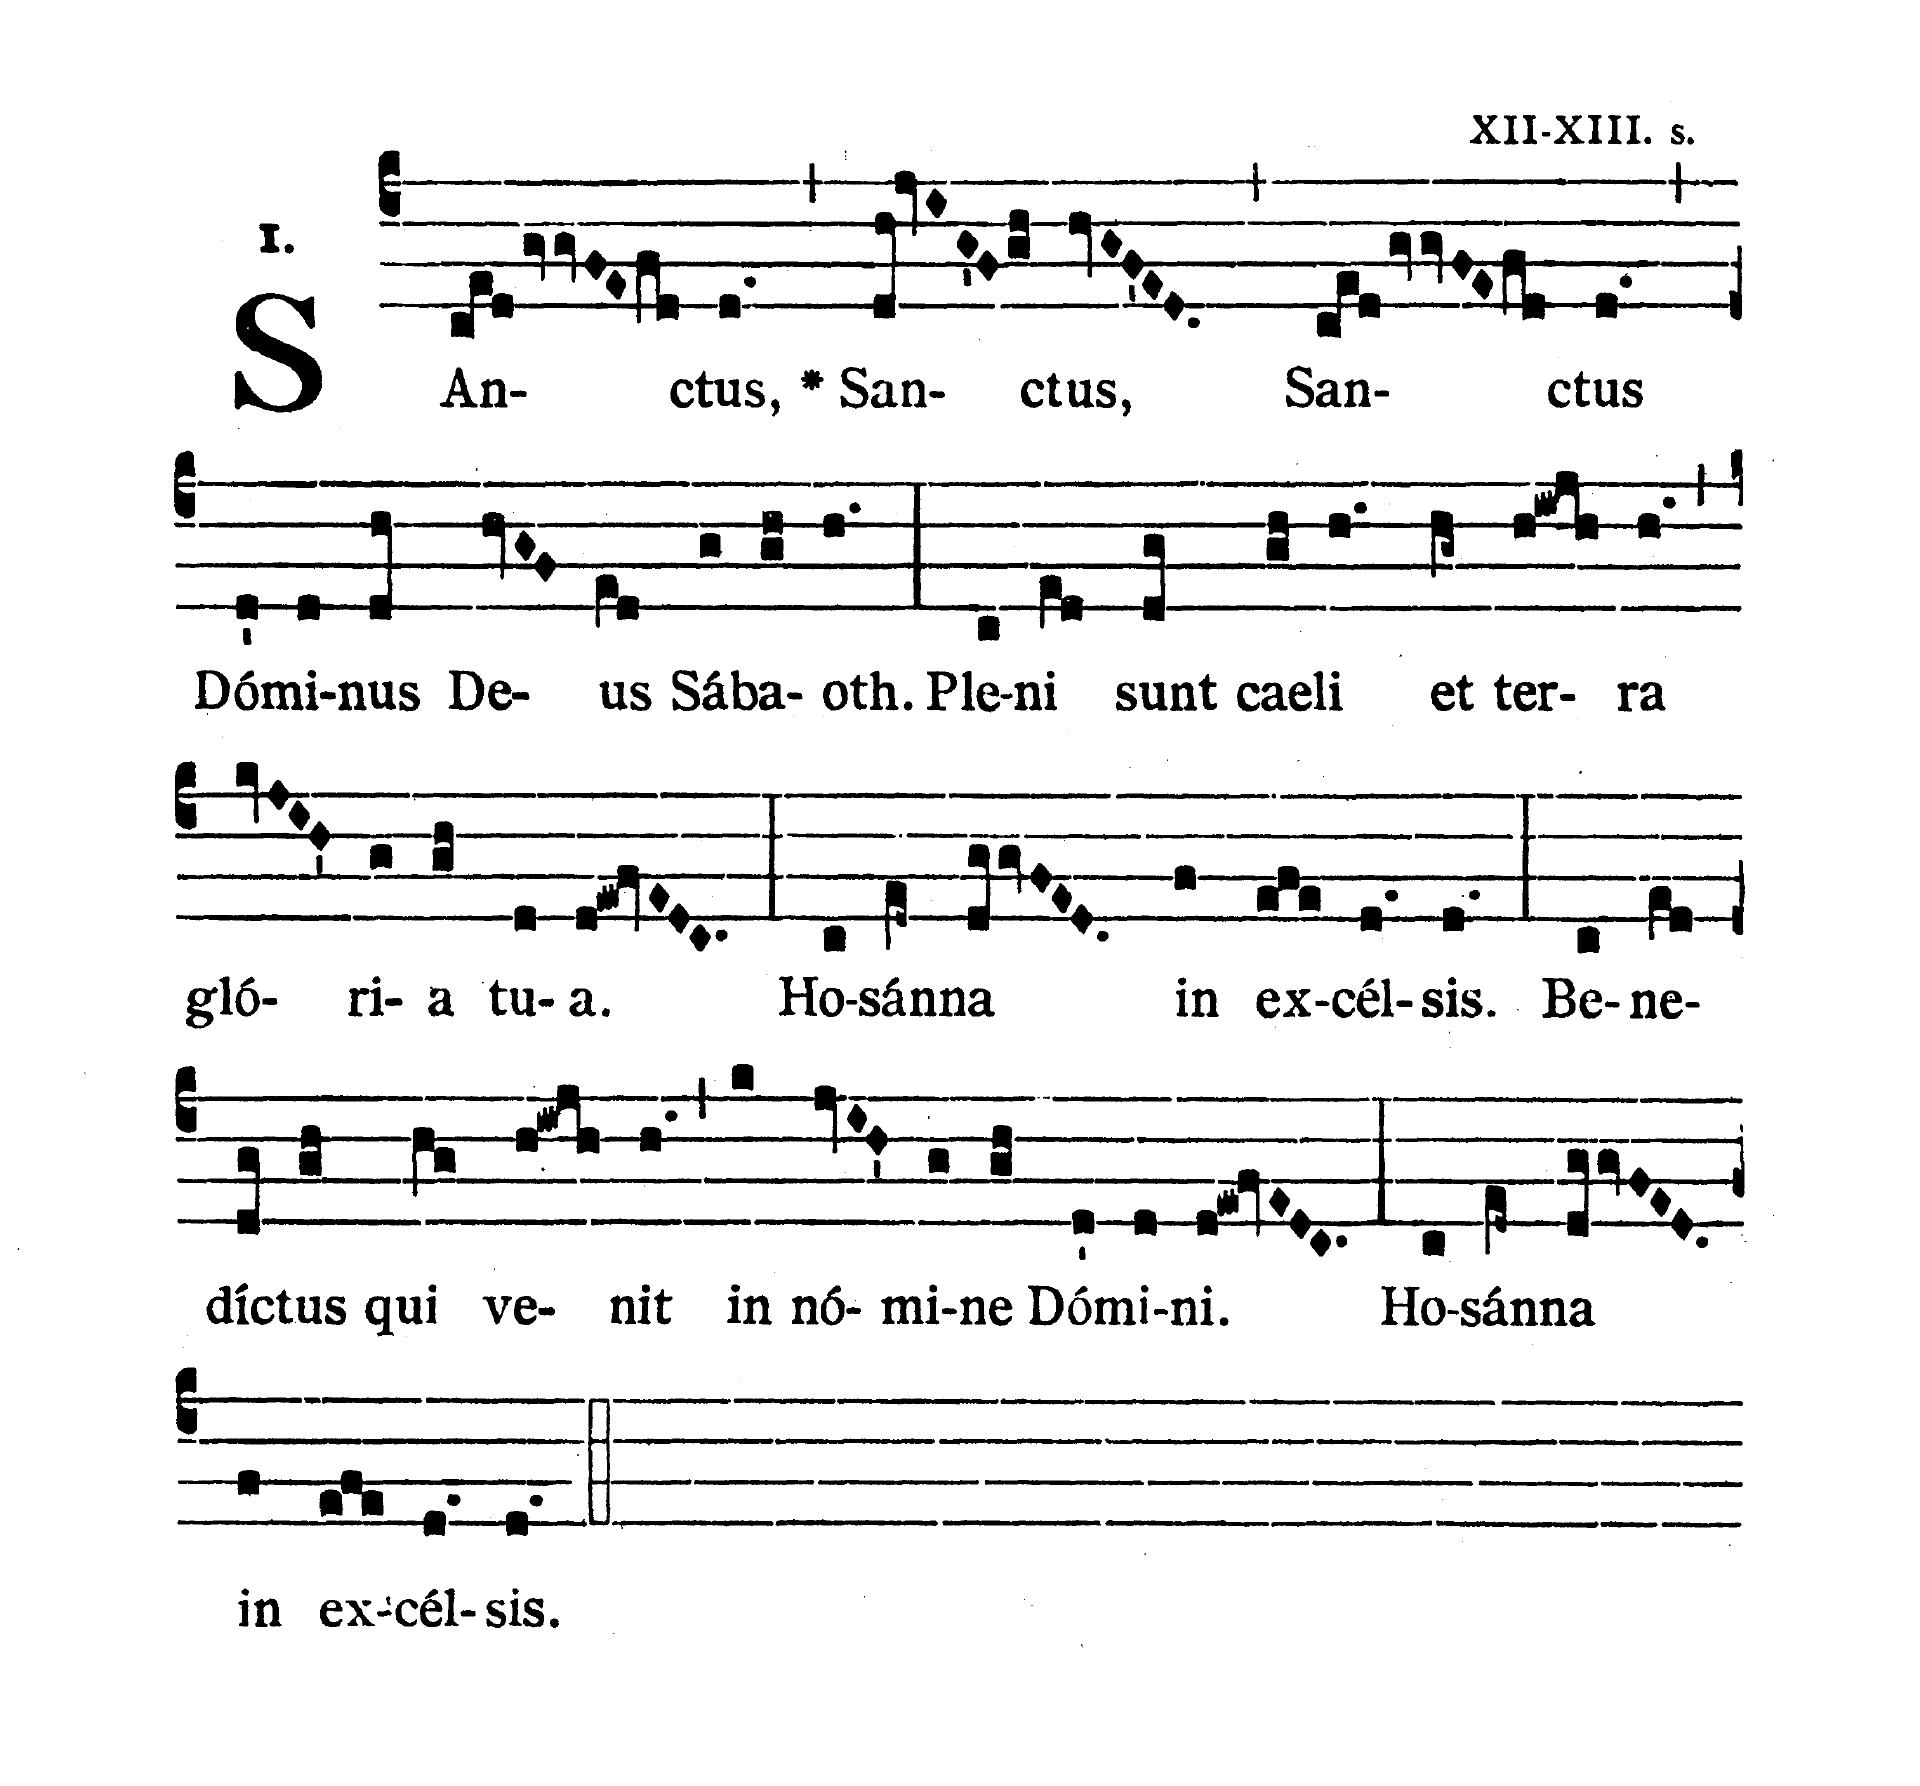 Missa II (Kyrie fons bonitatis) - Sanctus